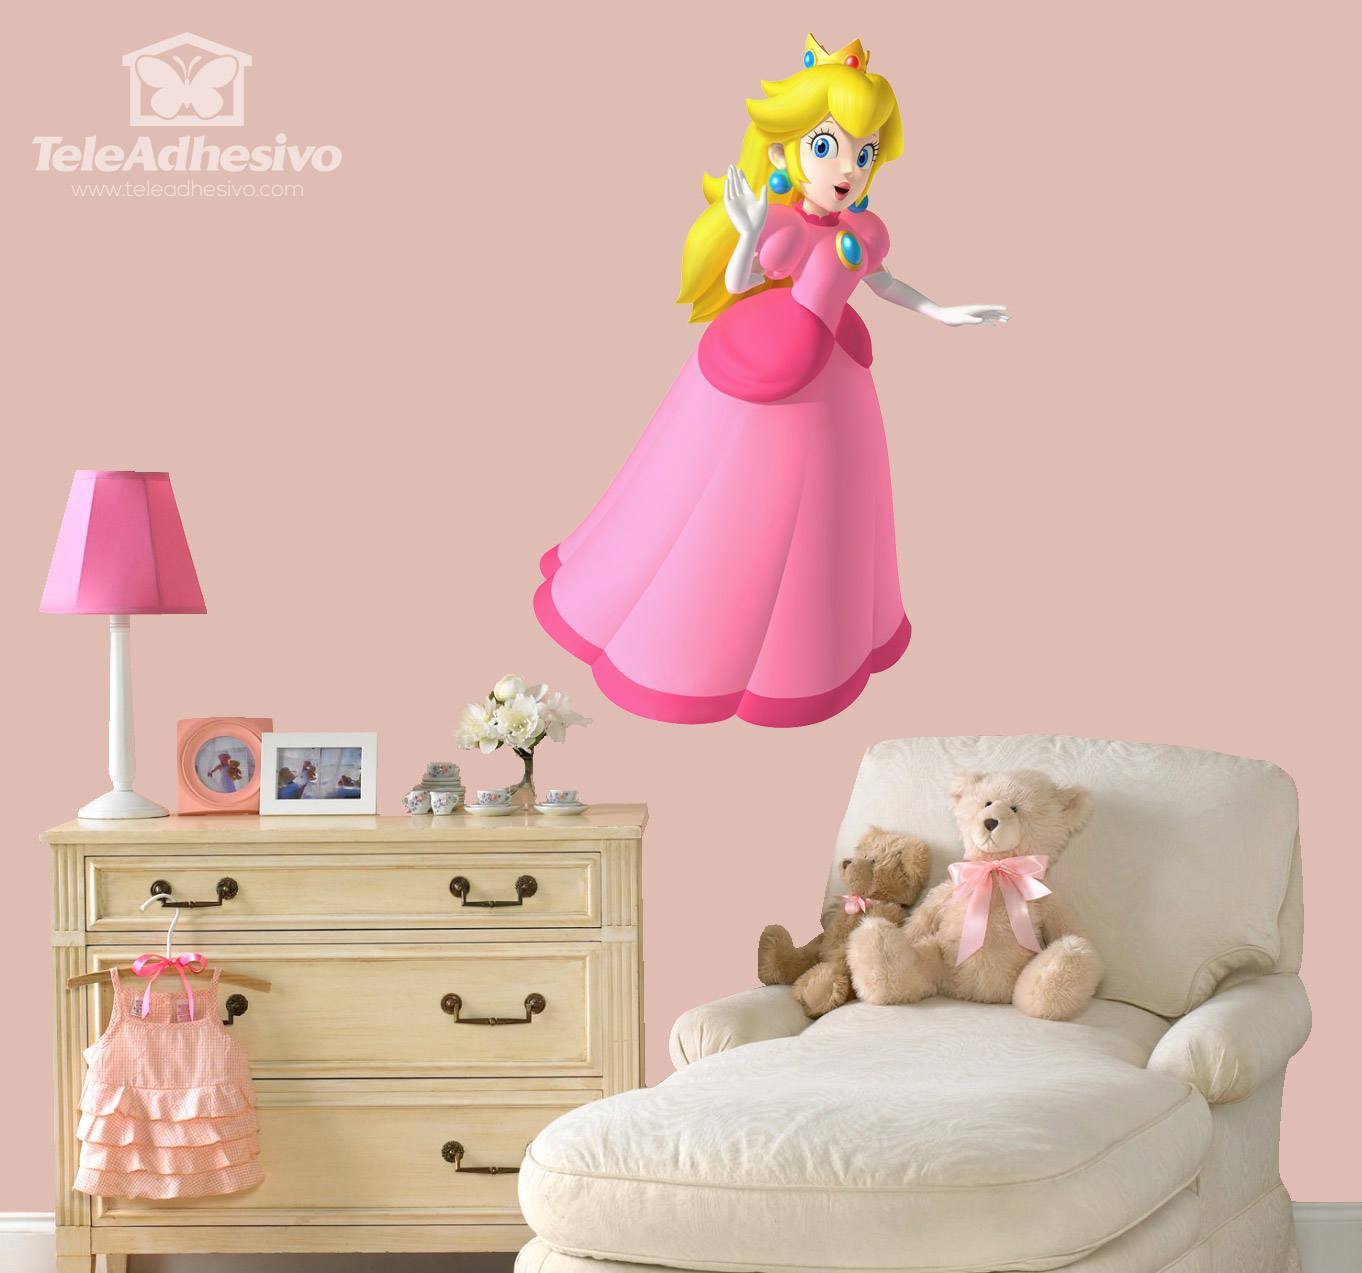 Kinderzimmer Wandtattoo: Princess Peach